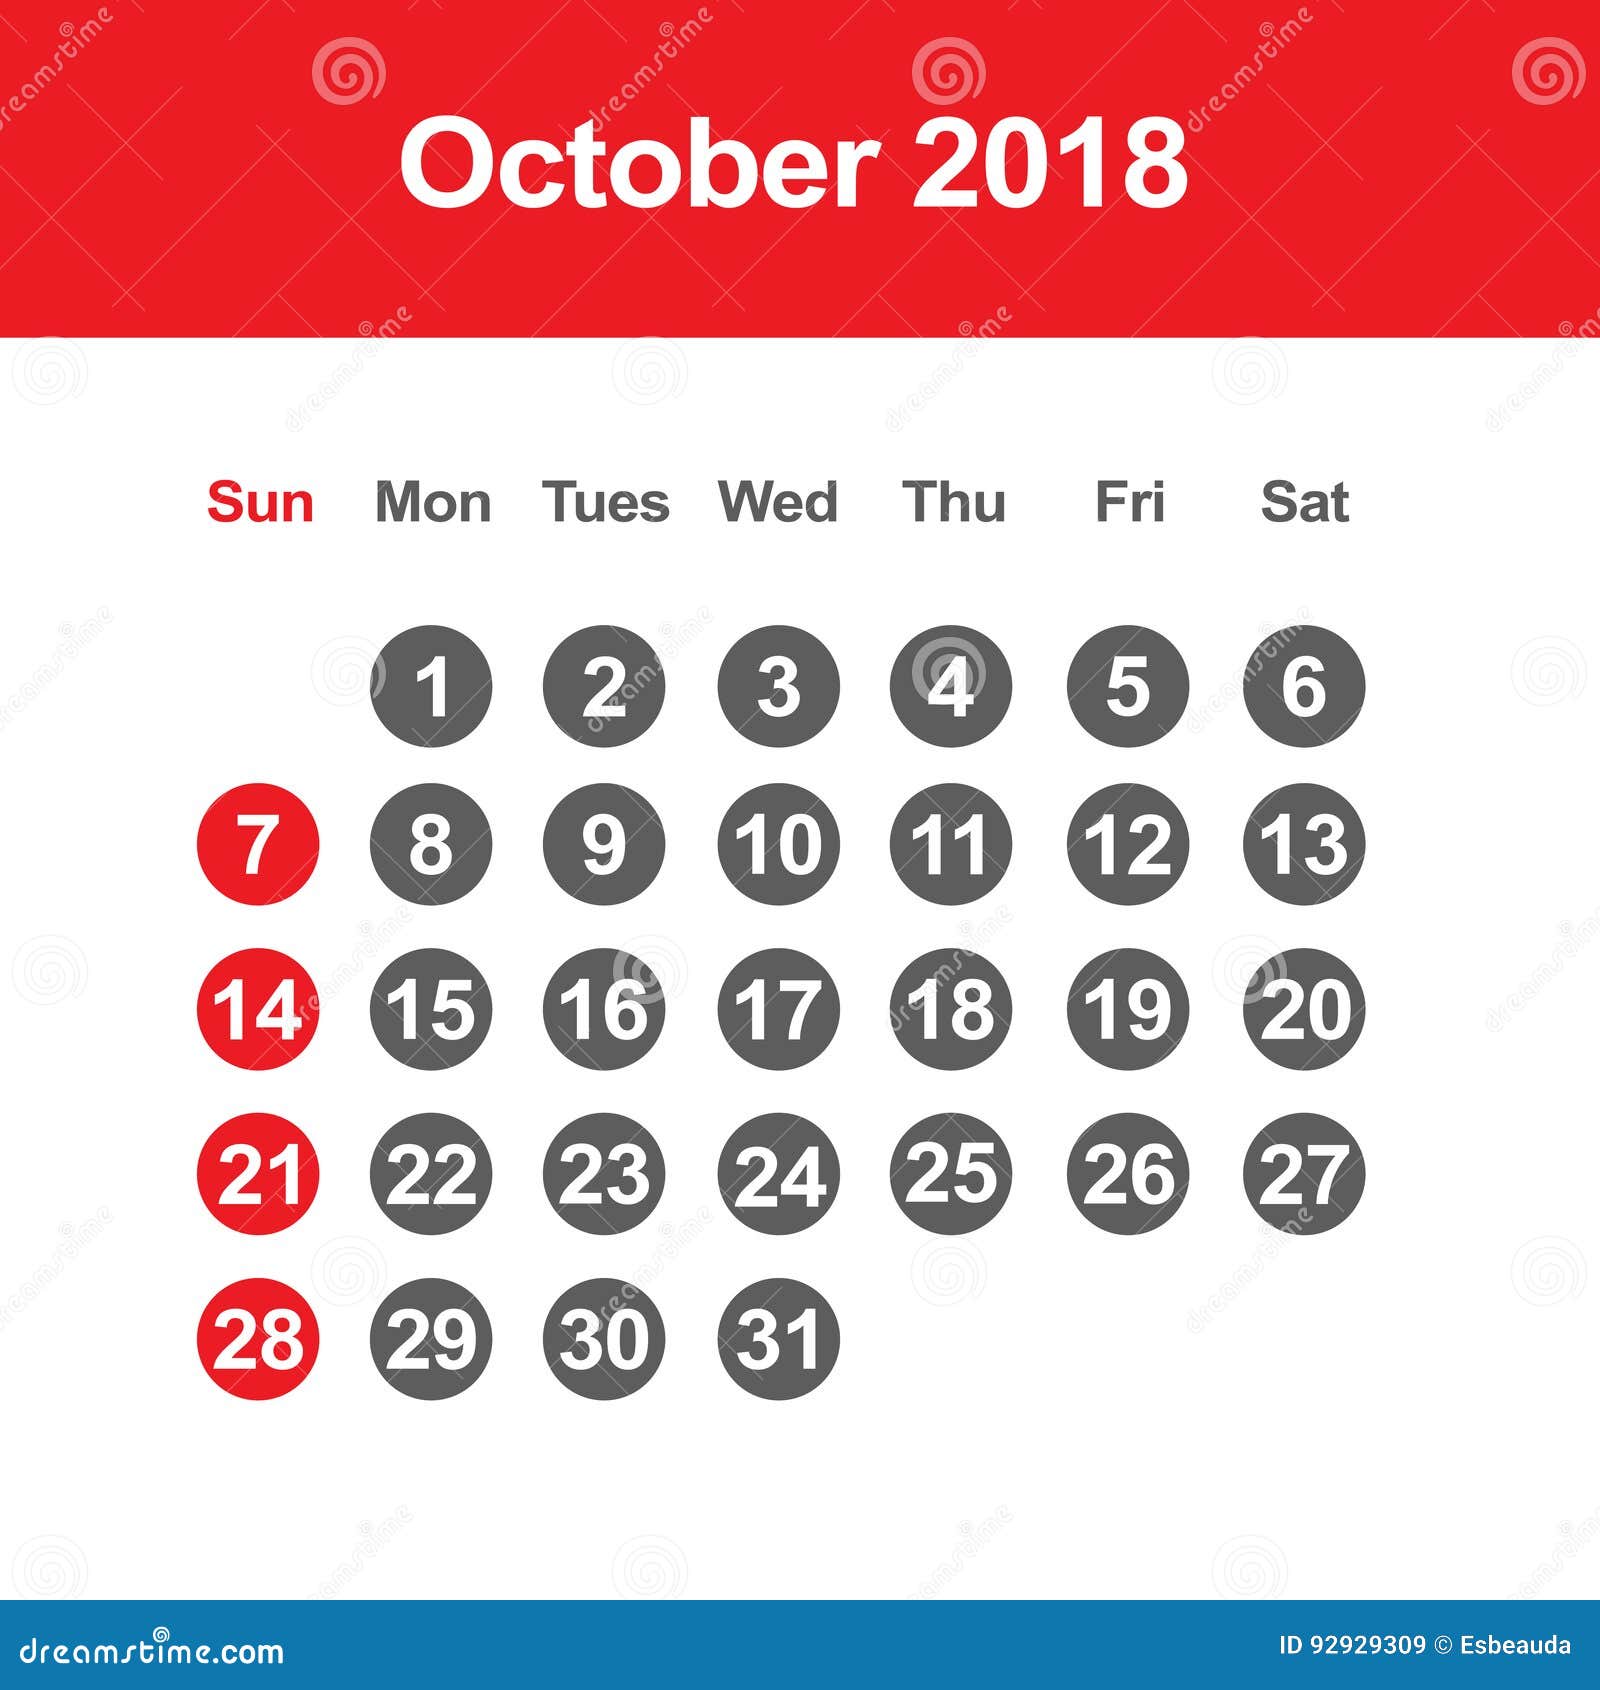 october-2018-calendars-for-word-excel-pdf